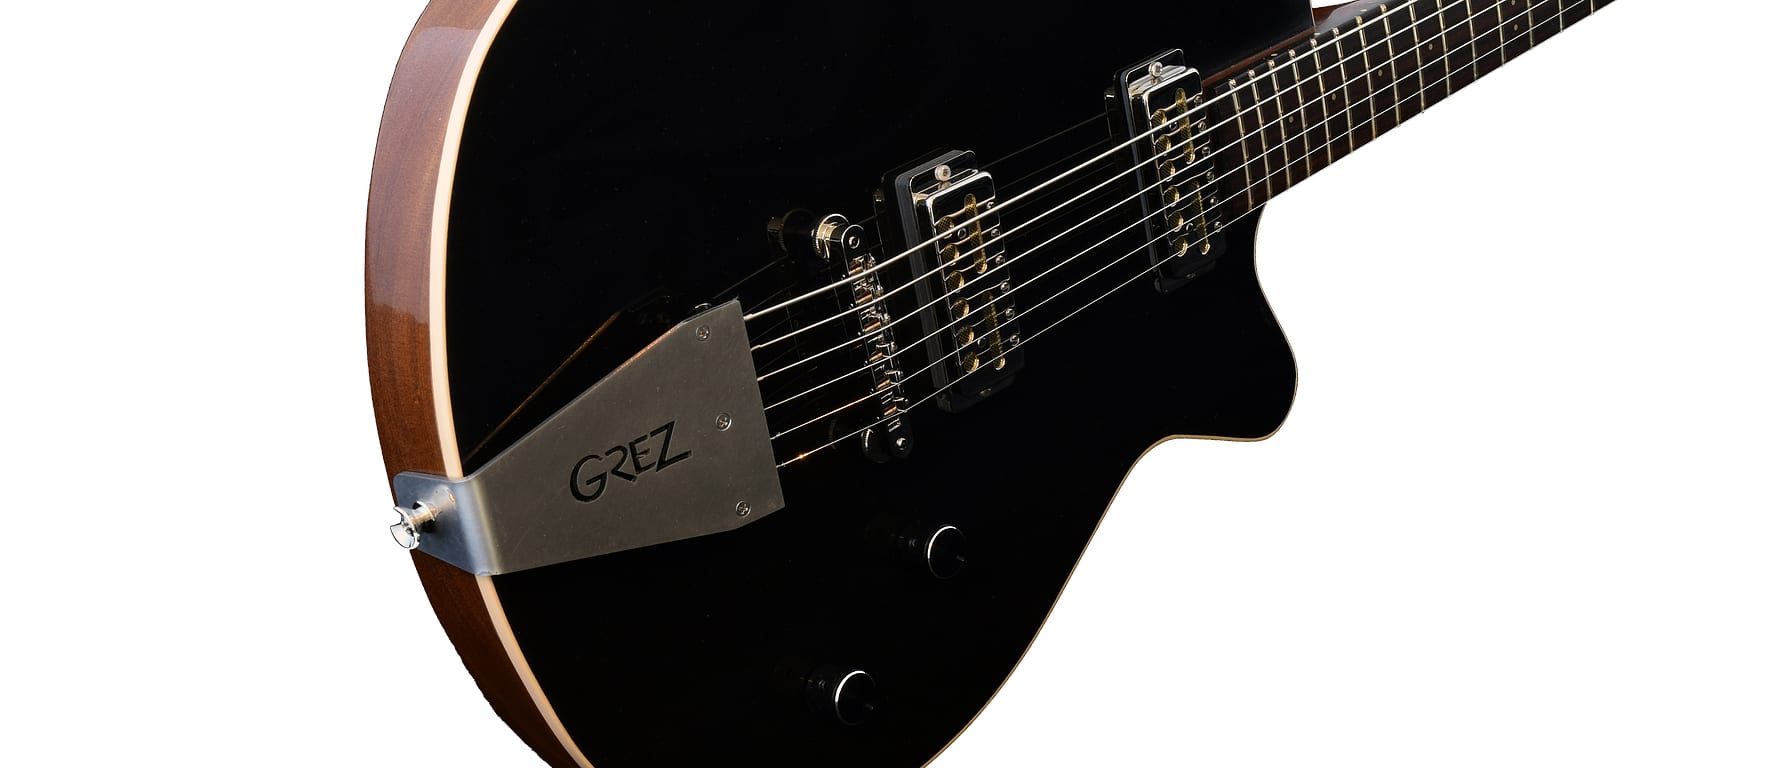 Grez Guitars 'Grez' tailpiece